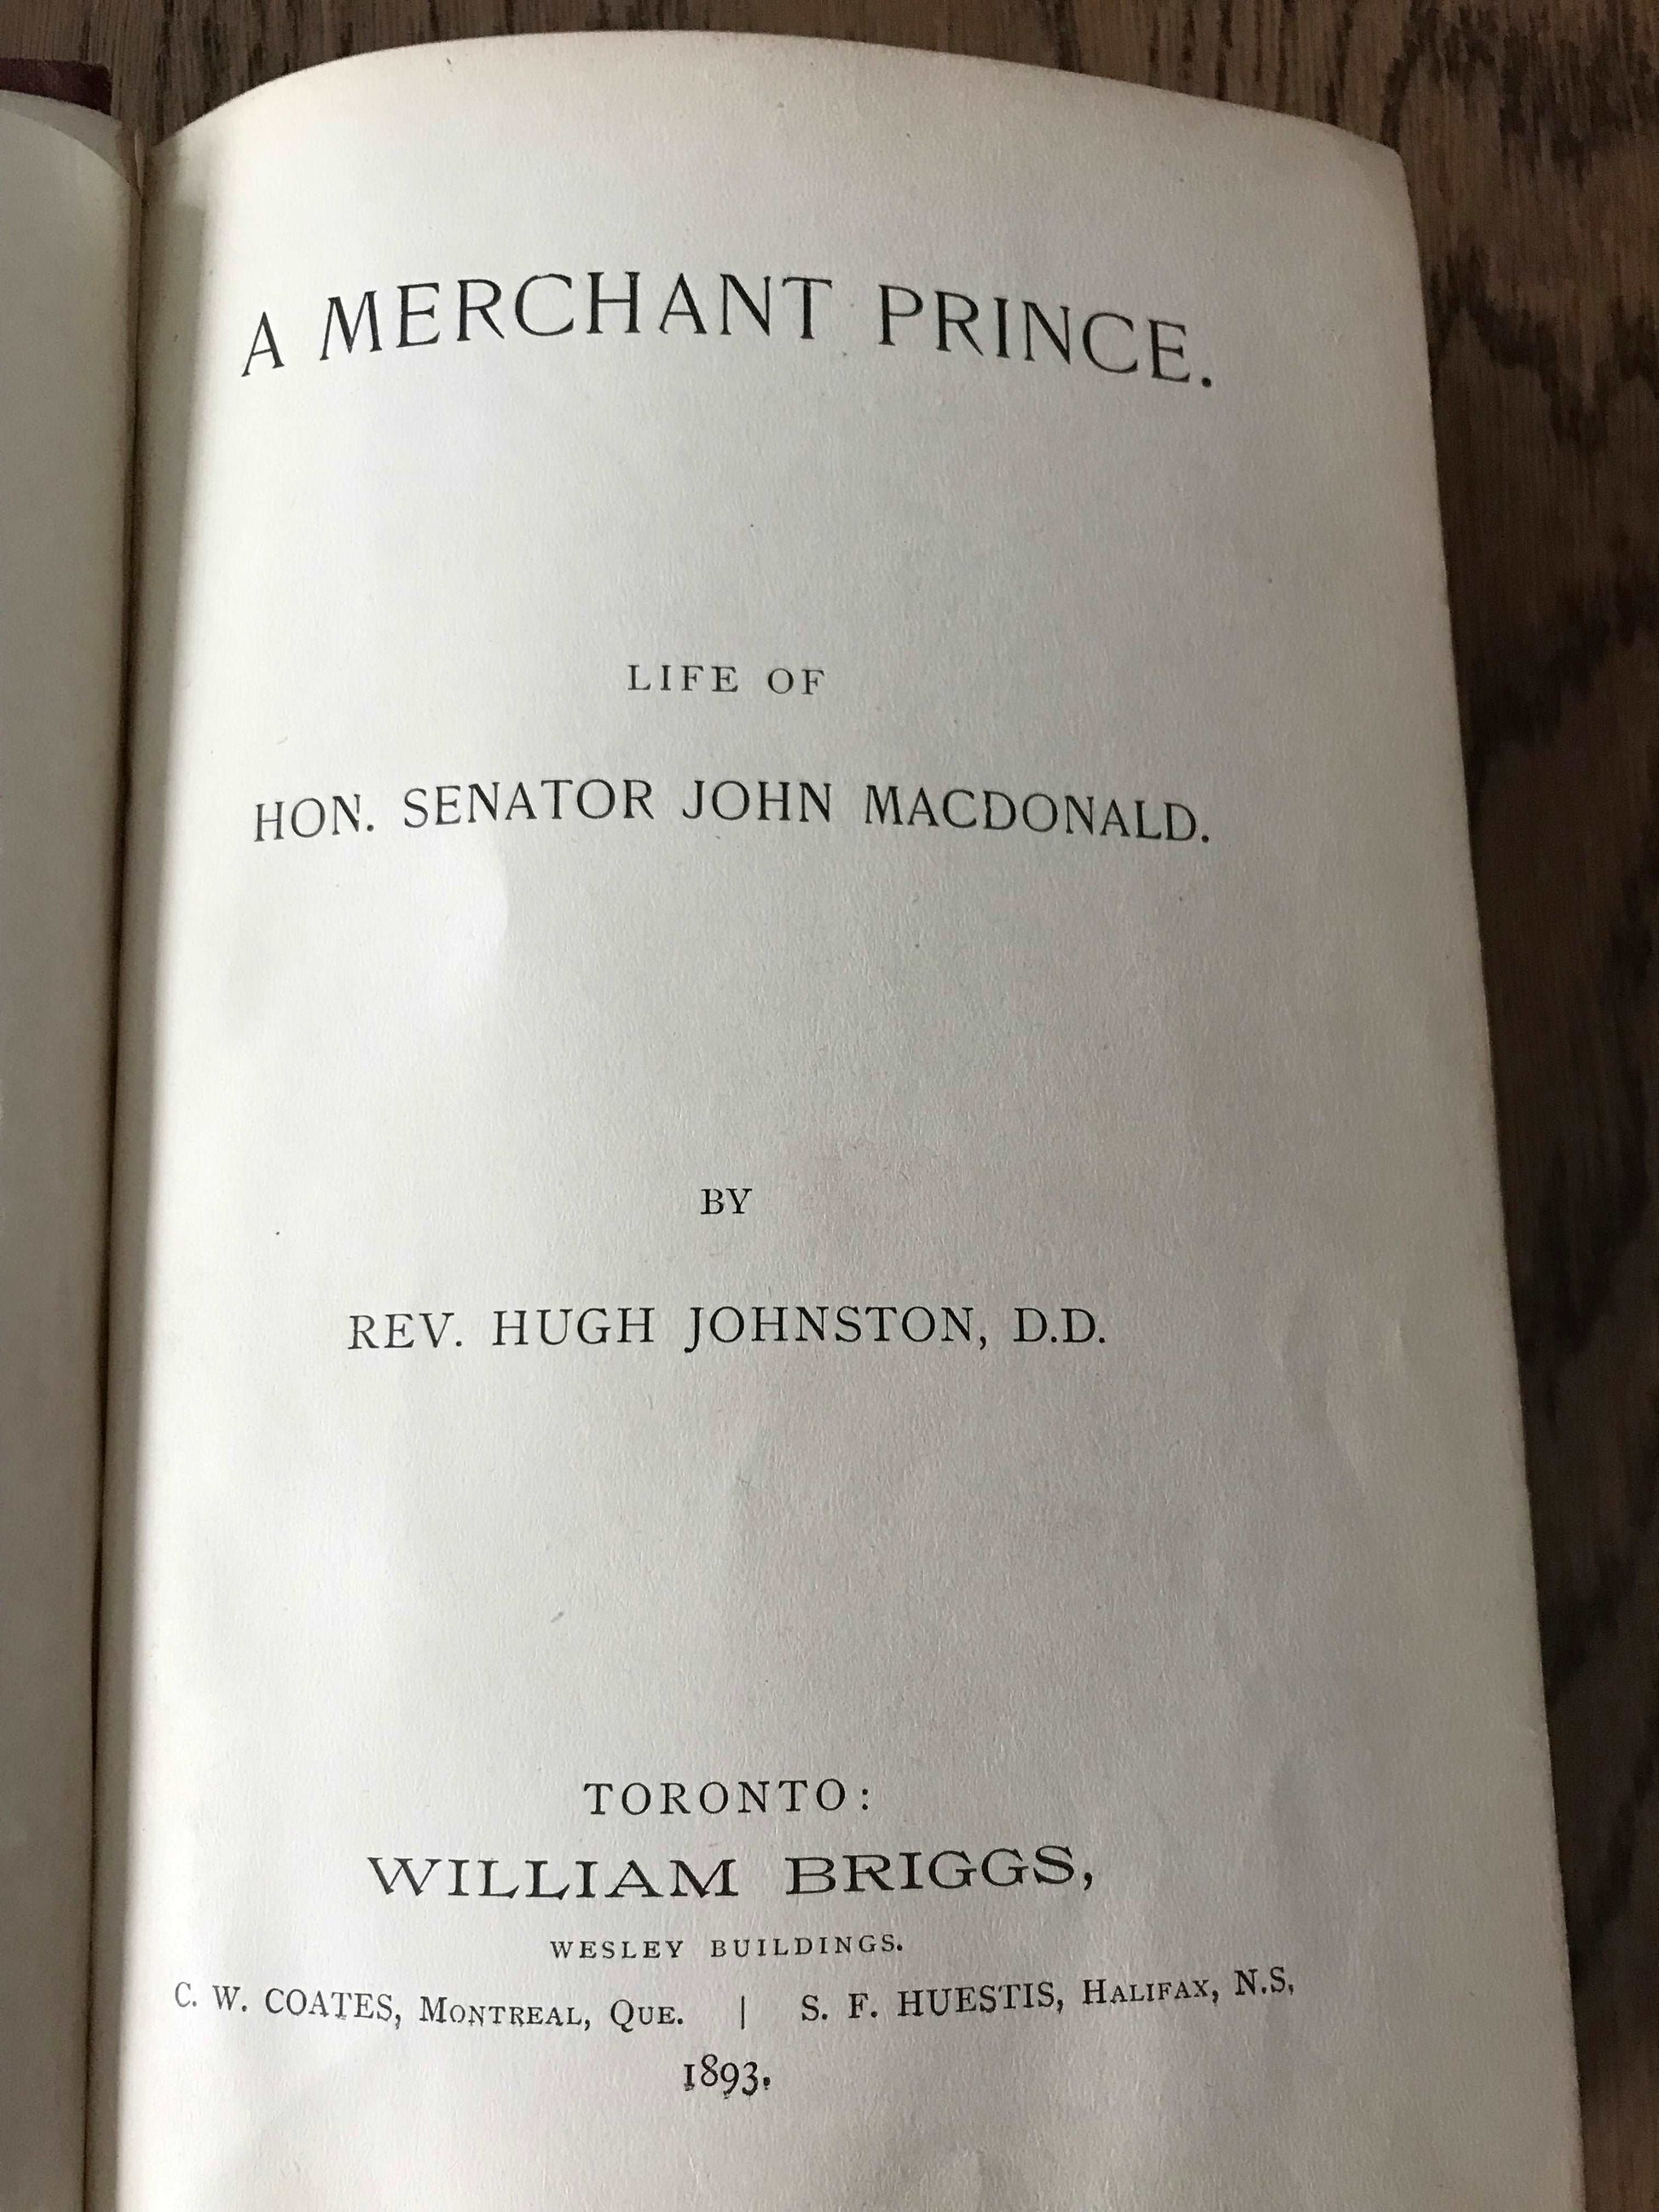 A MERCHANT PRINCE .. LIFE OF HON. SENATOR JOHN MACDONALD - REV. HUGH JOHNSON, D.D. BooksCardsNBikes